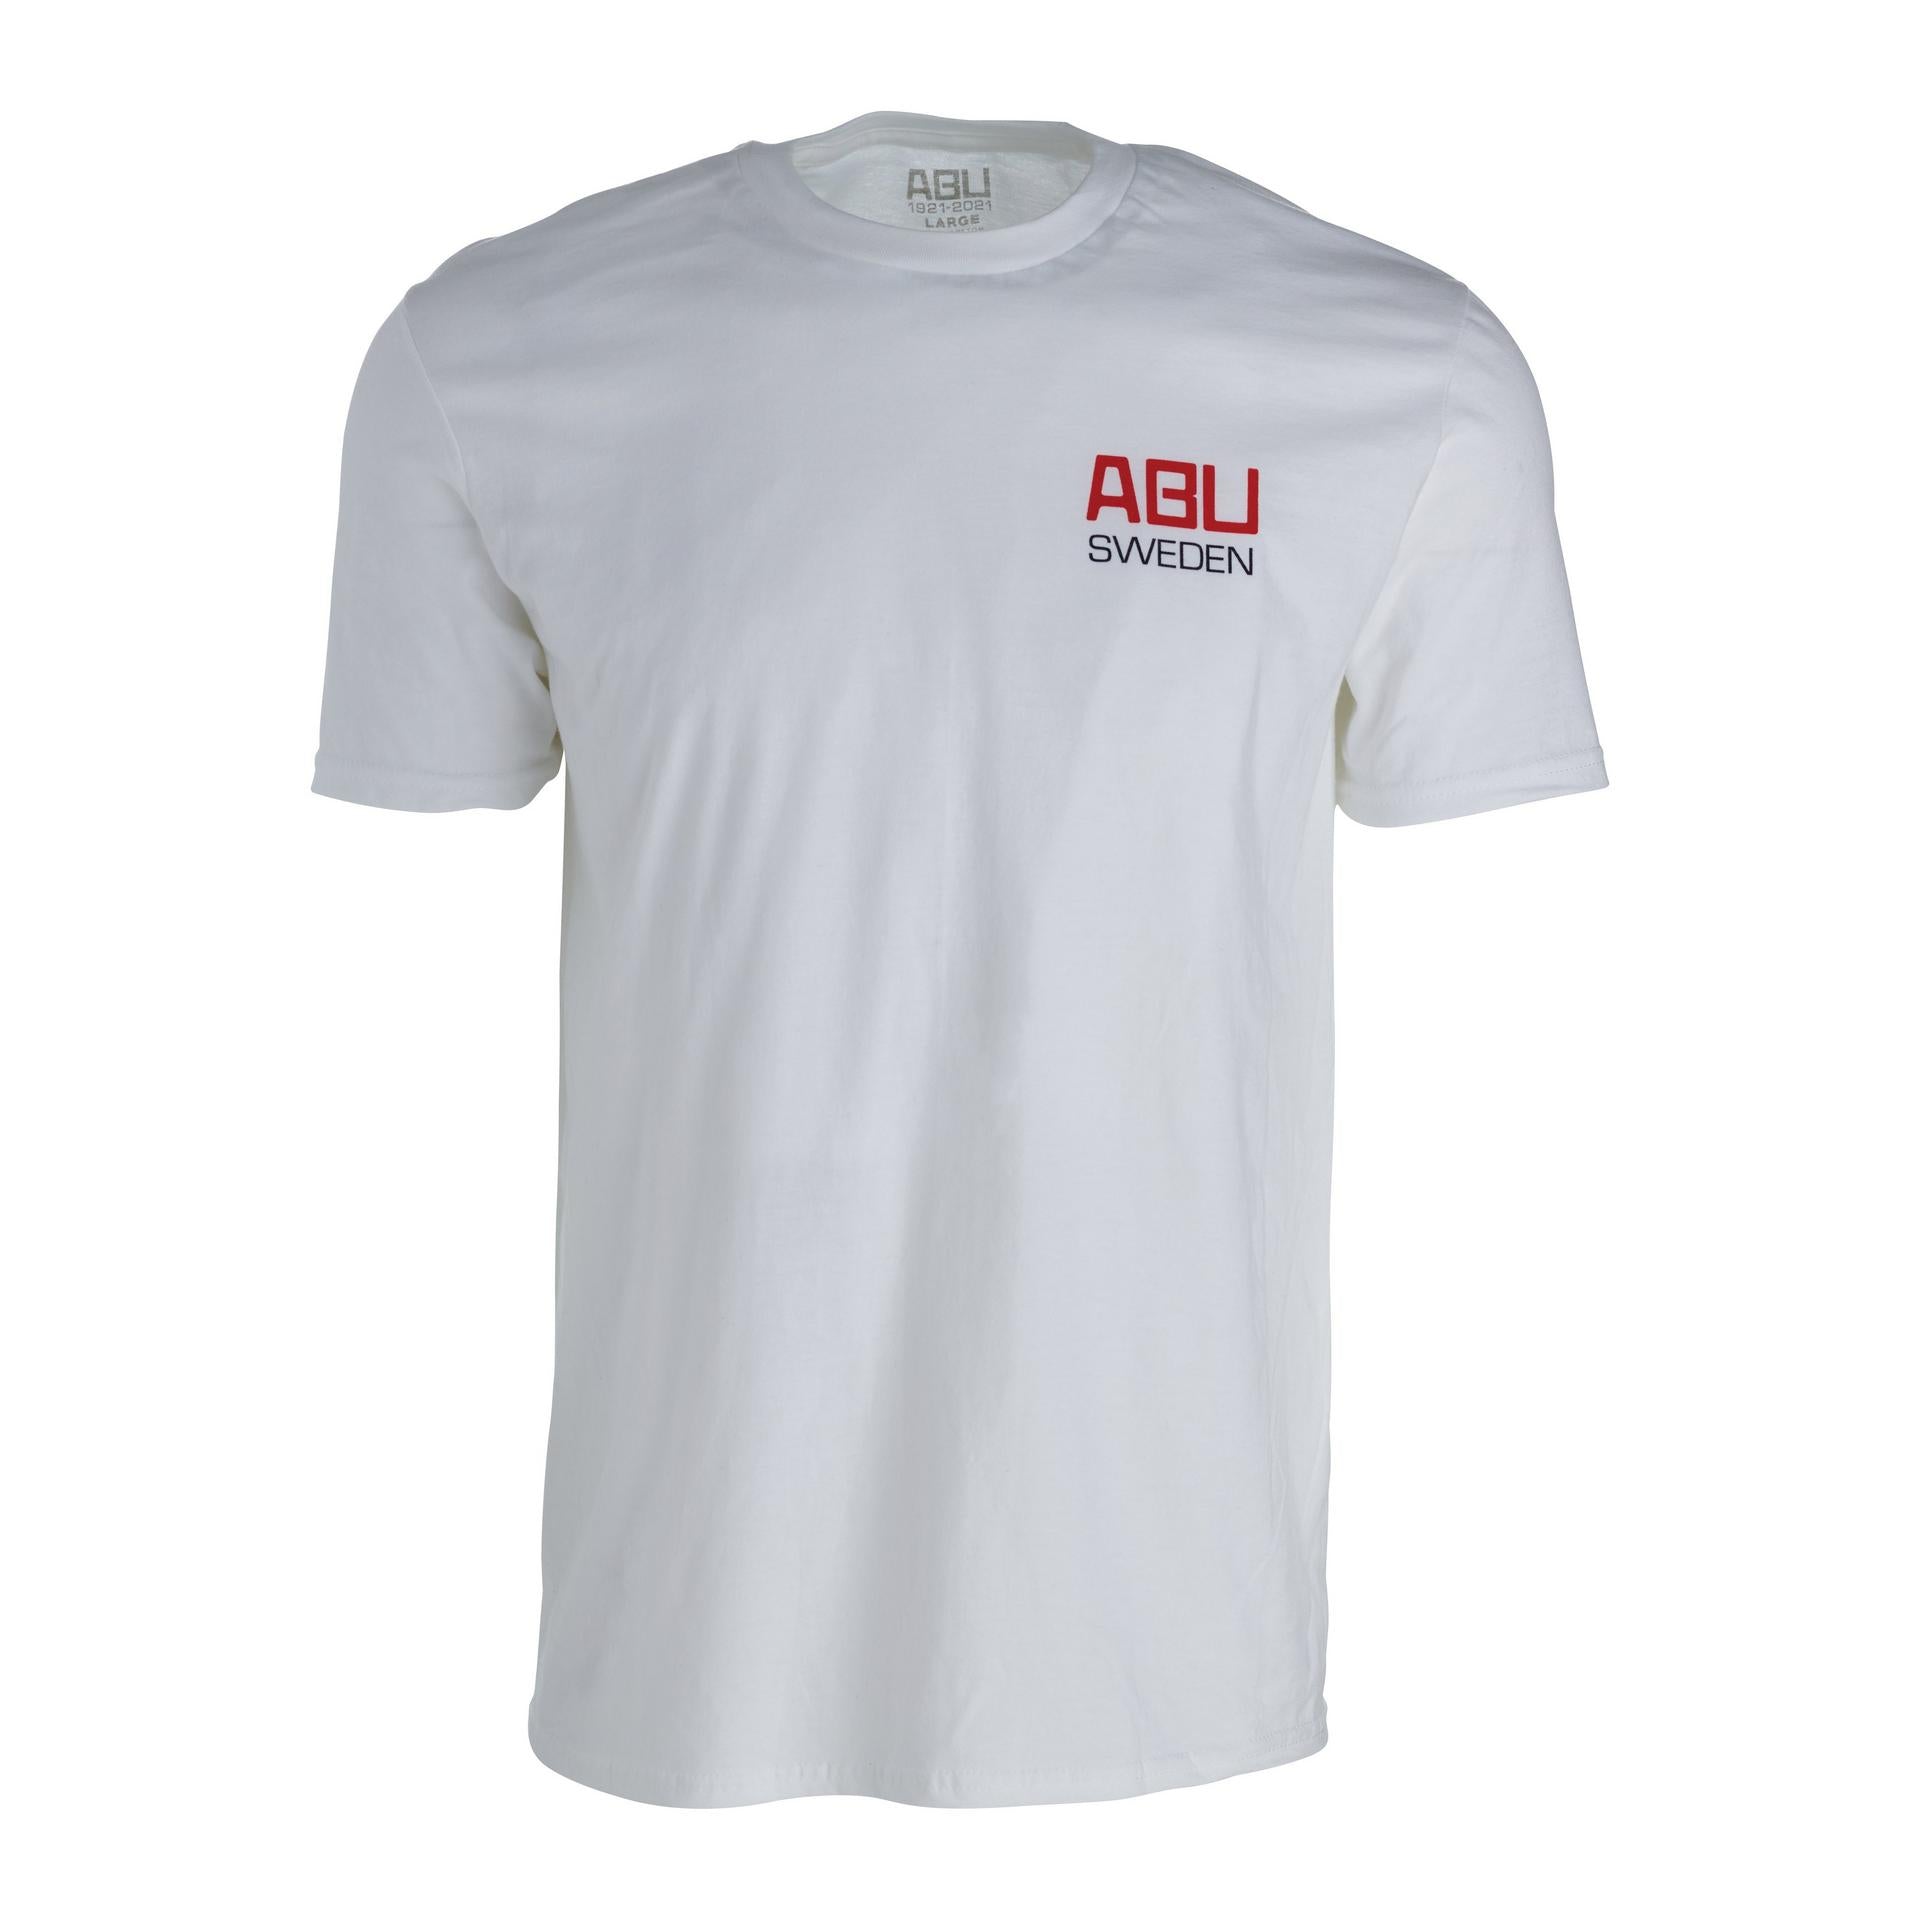 Abu Garcia Abu 100 Years T-Shirt - AB URFABRIKEN - White, XXL